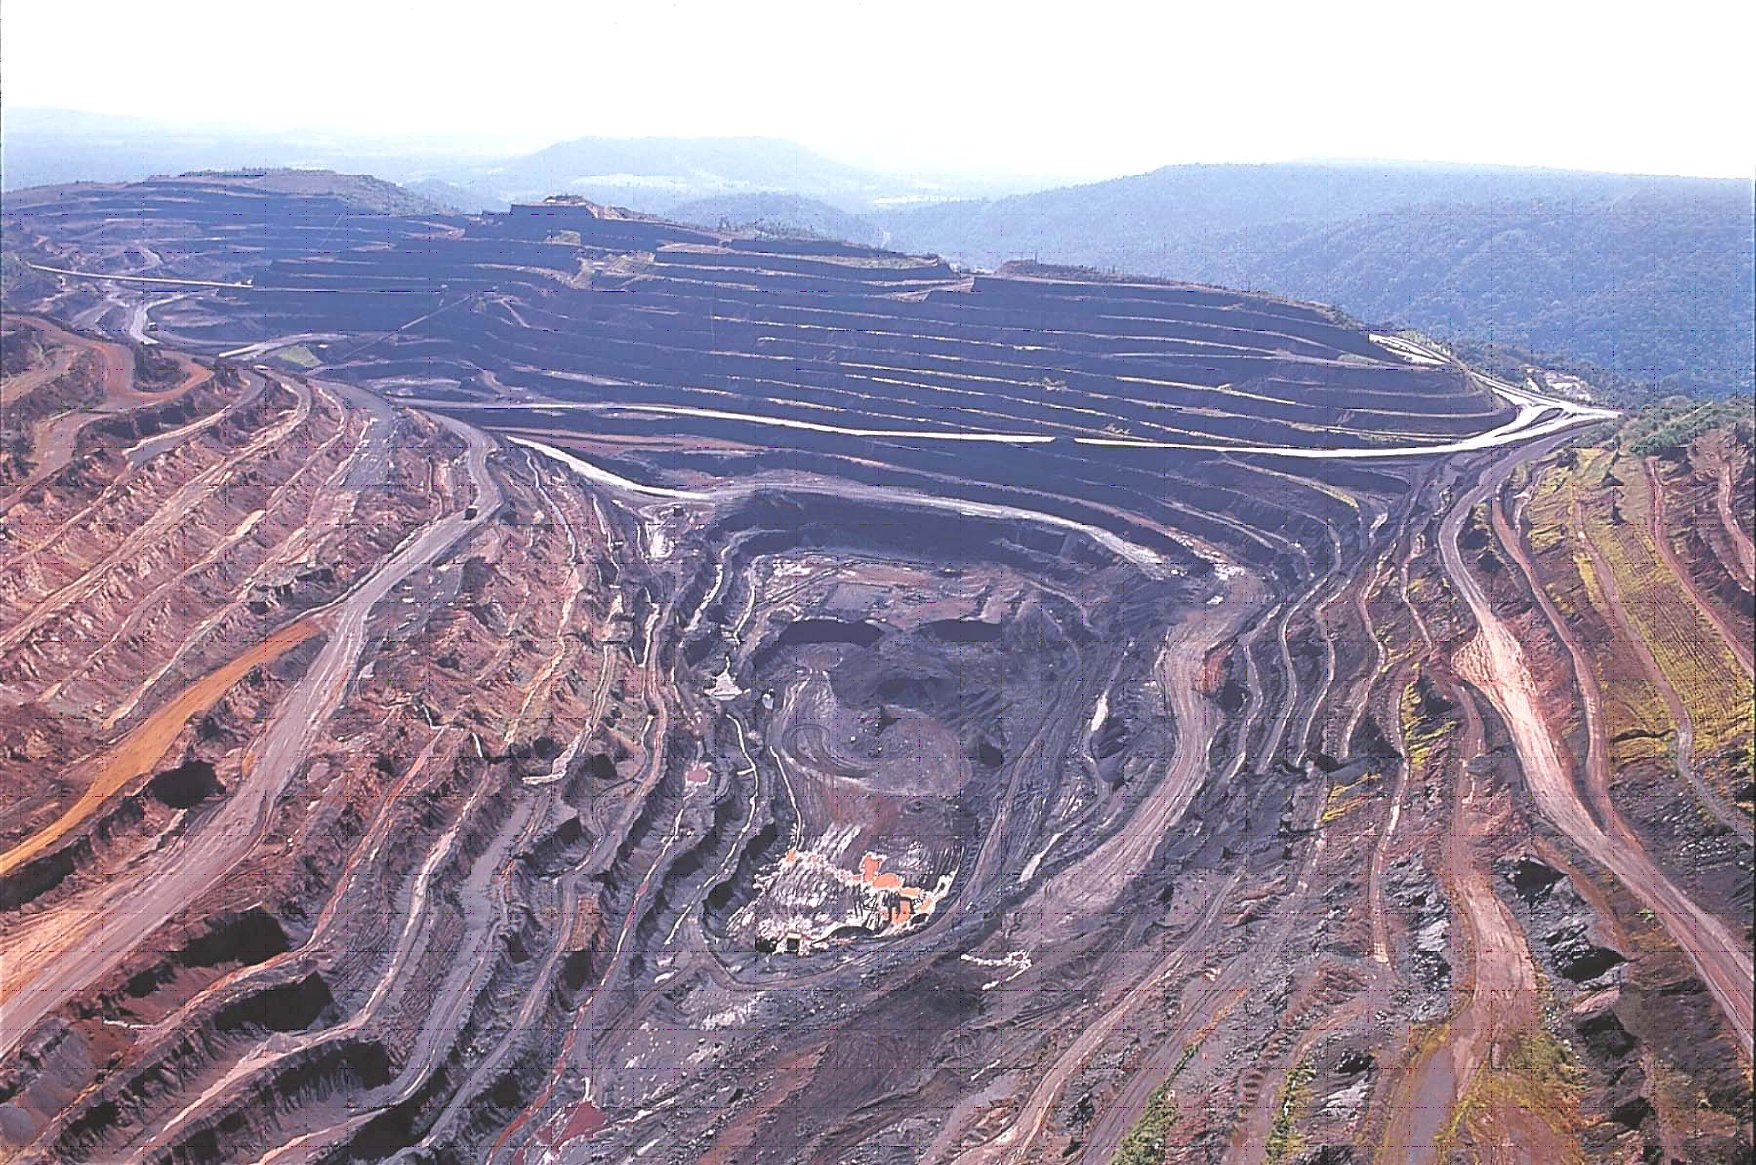  Vale obtém licença para ampliar mina em Carajás